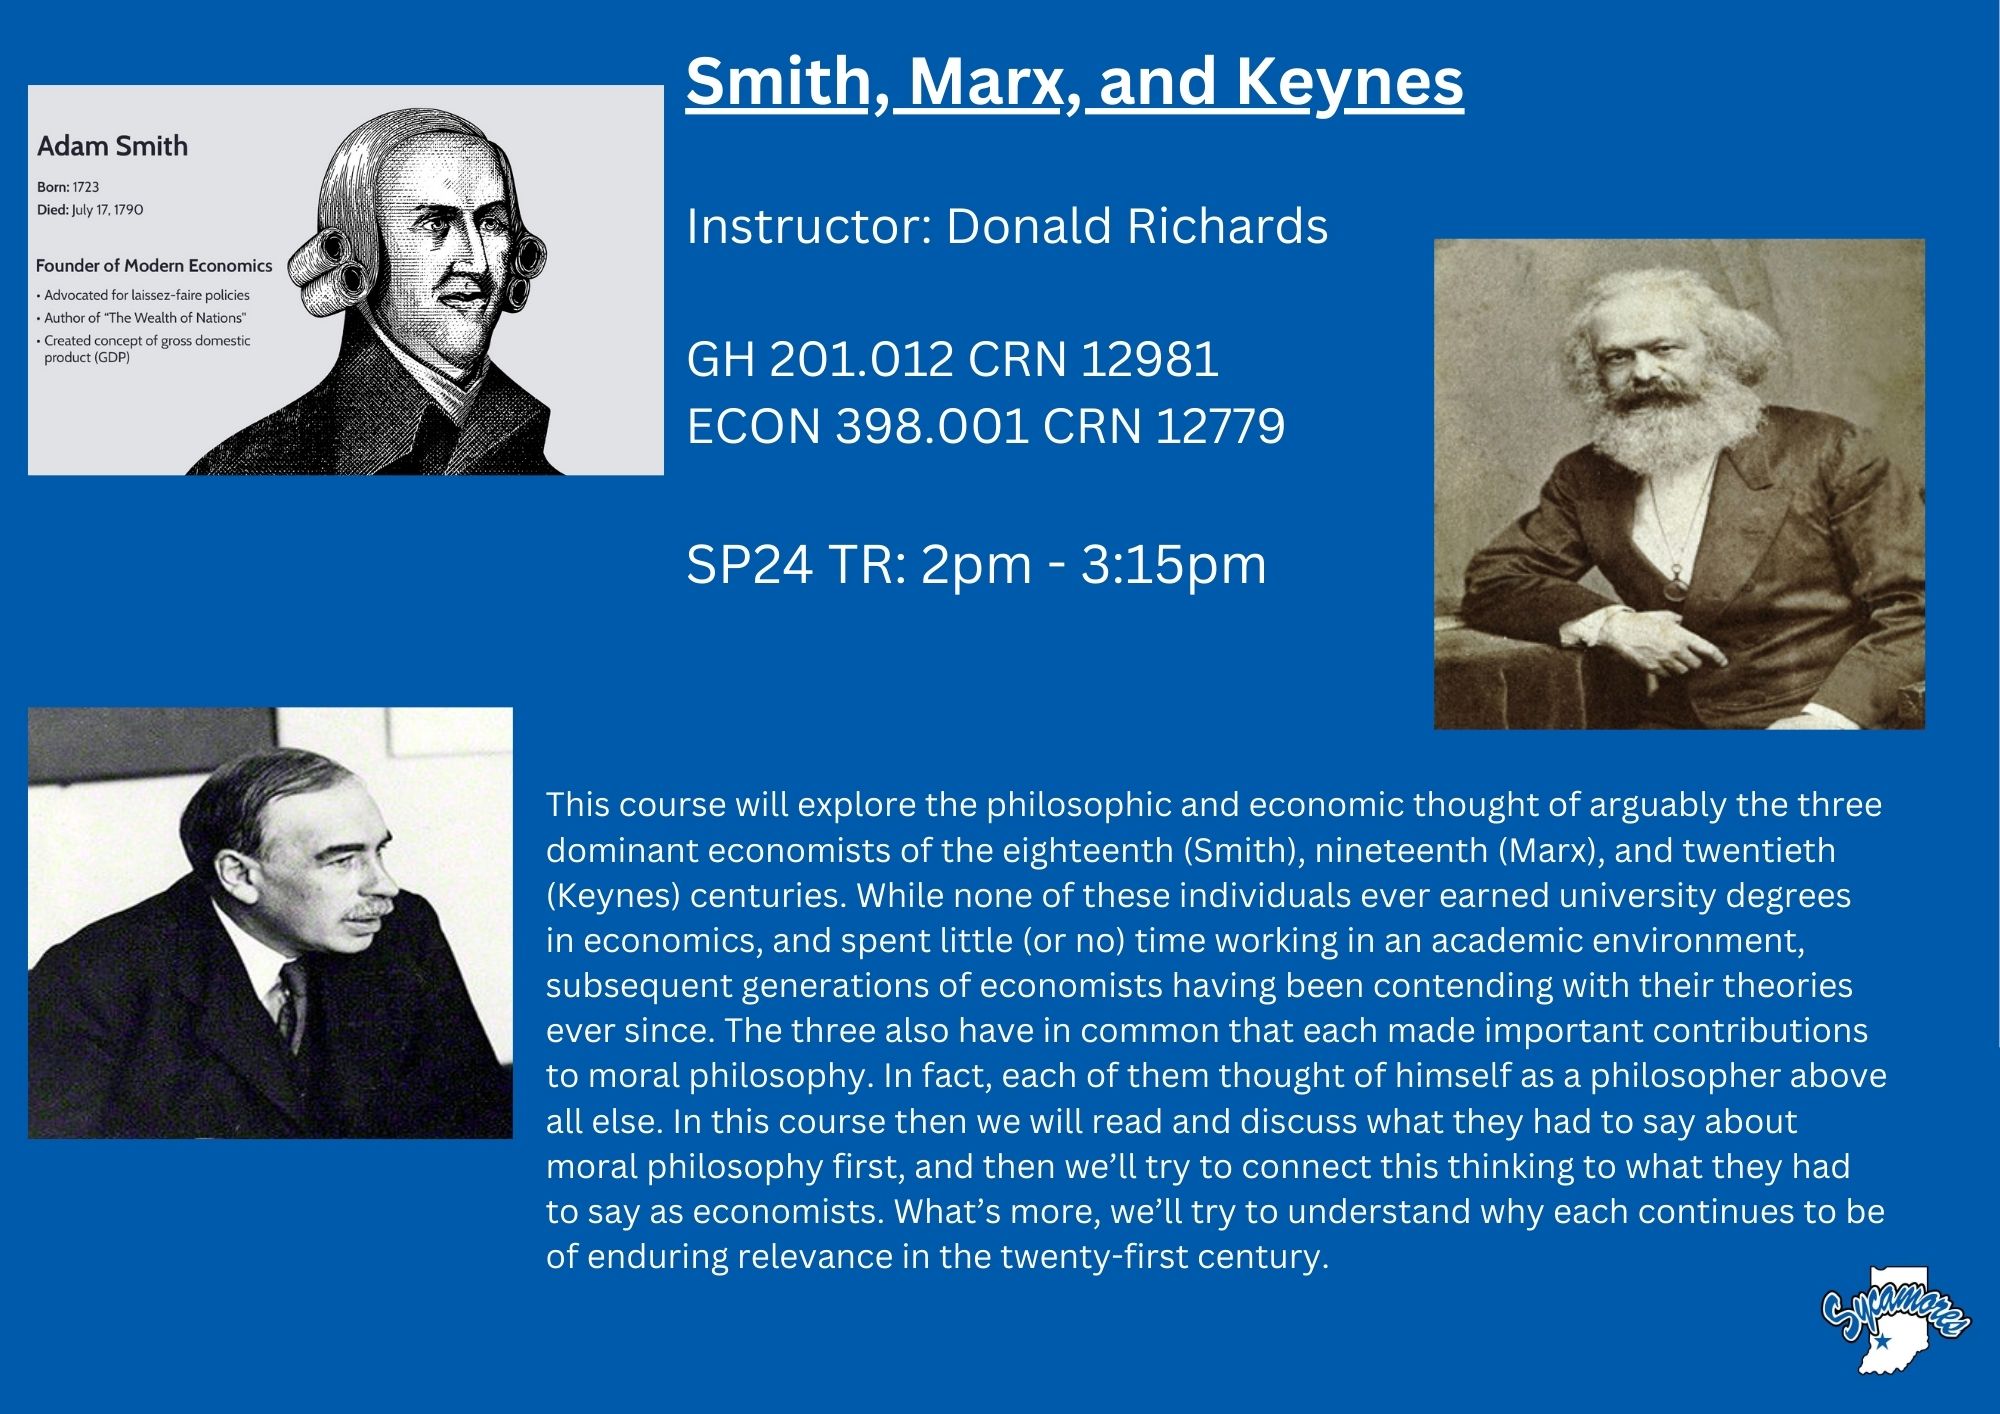 Smith, Marx, and Keynes flier